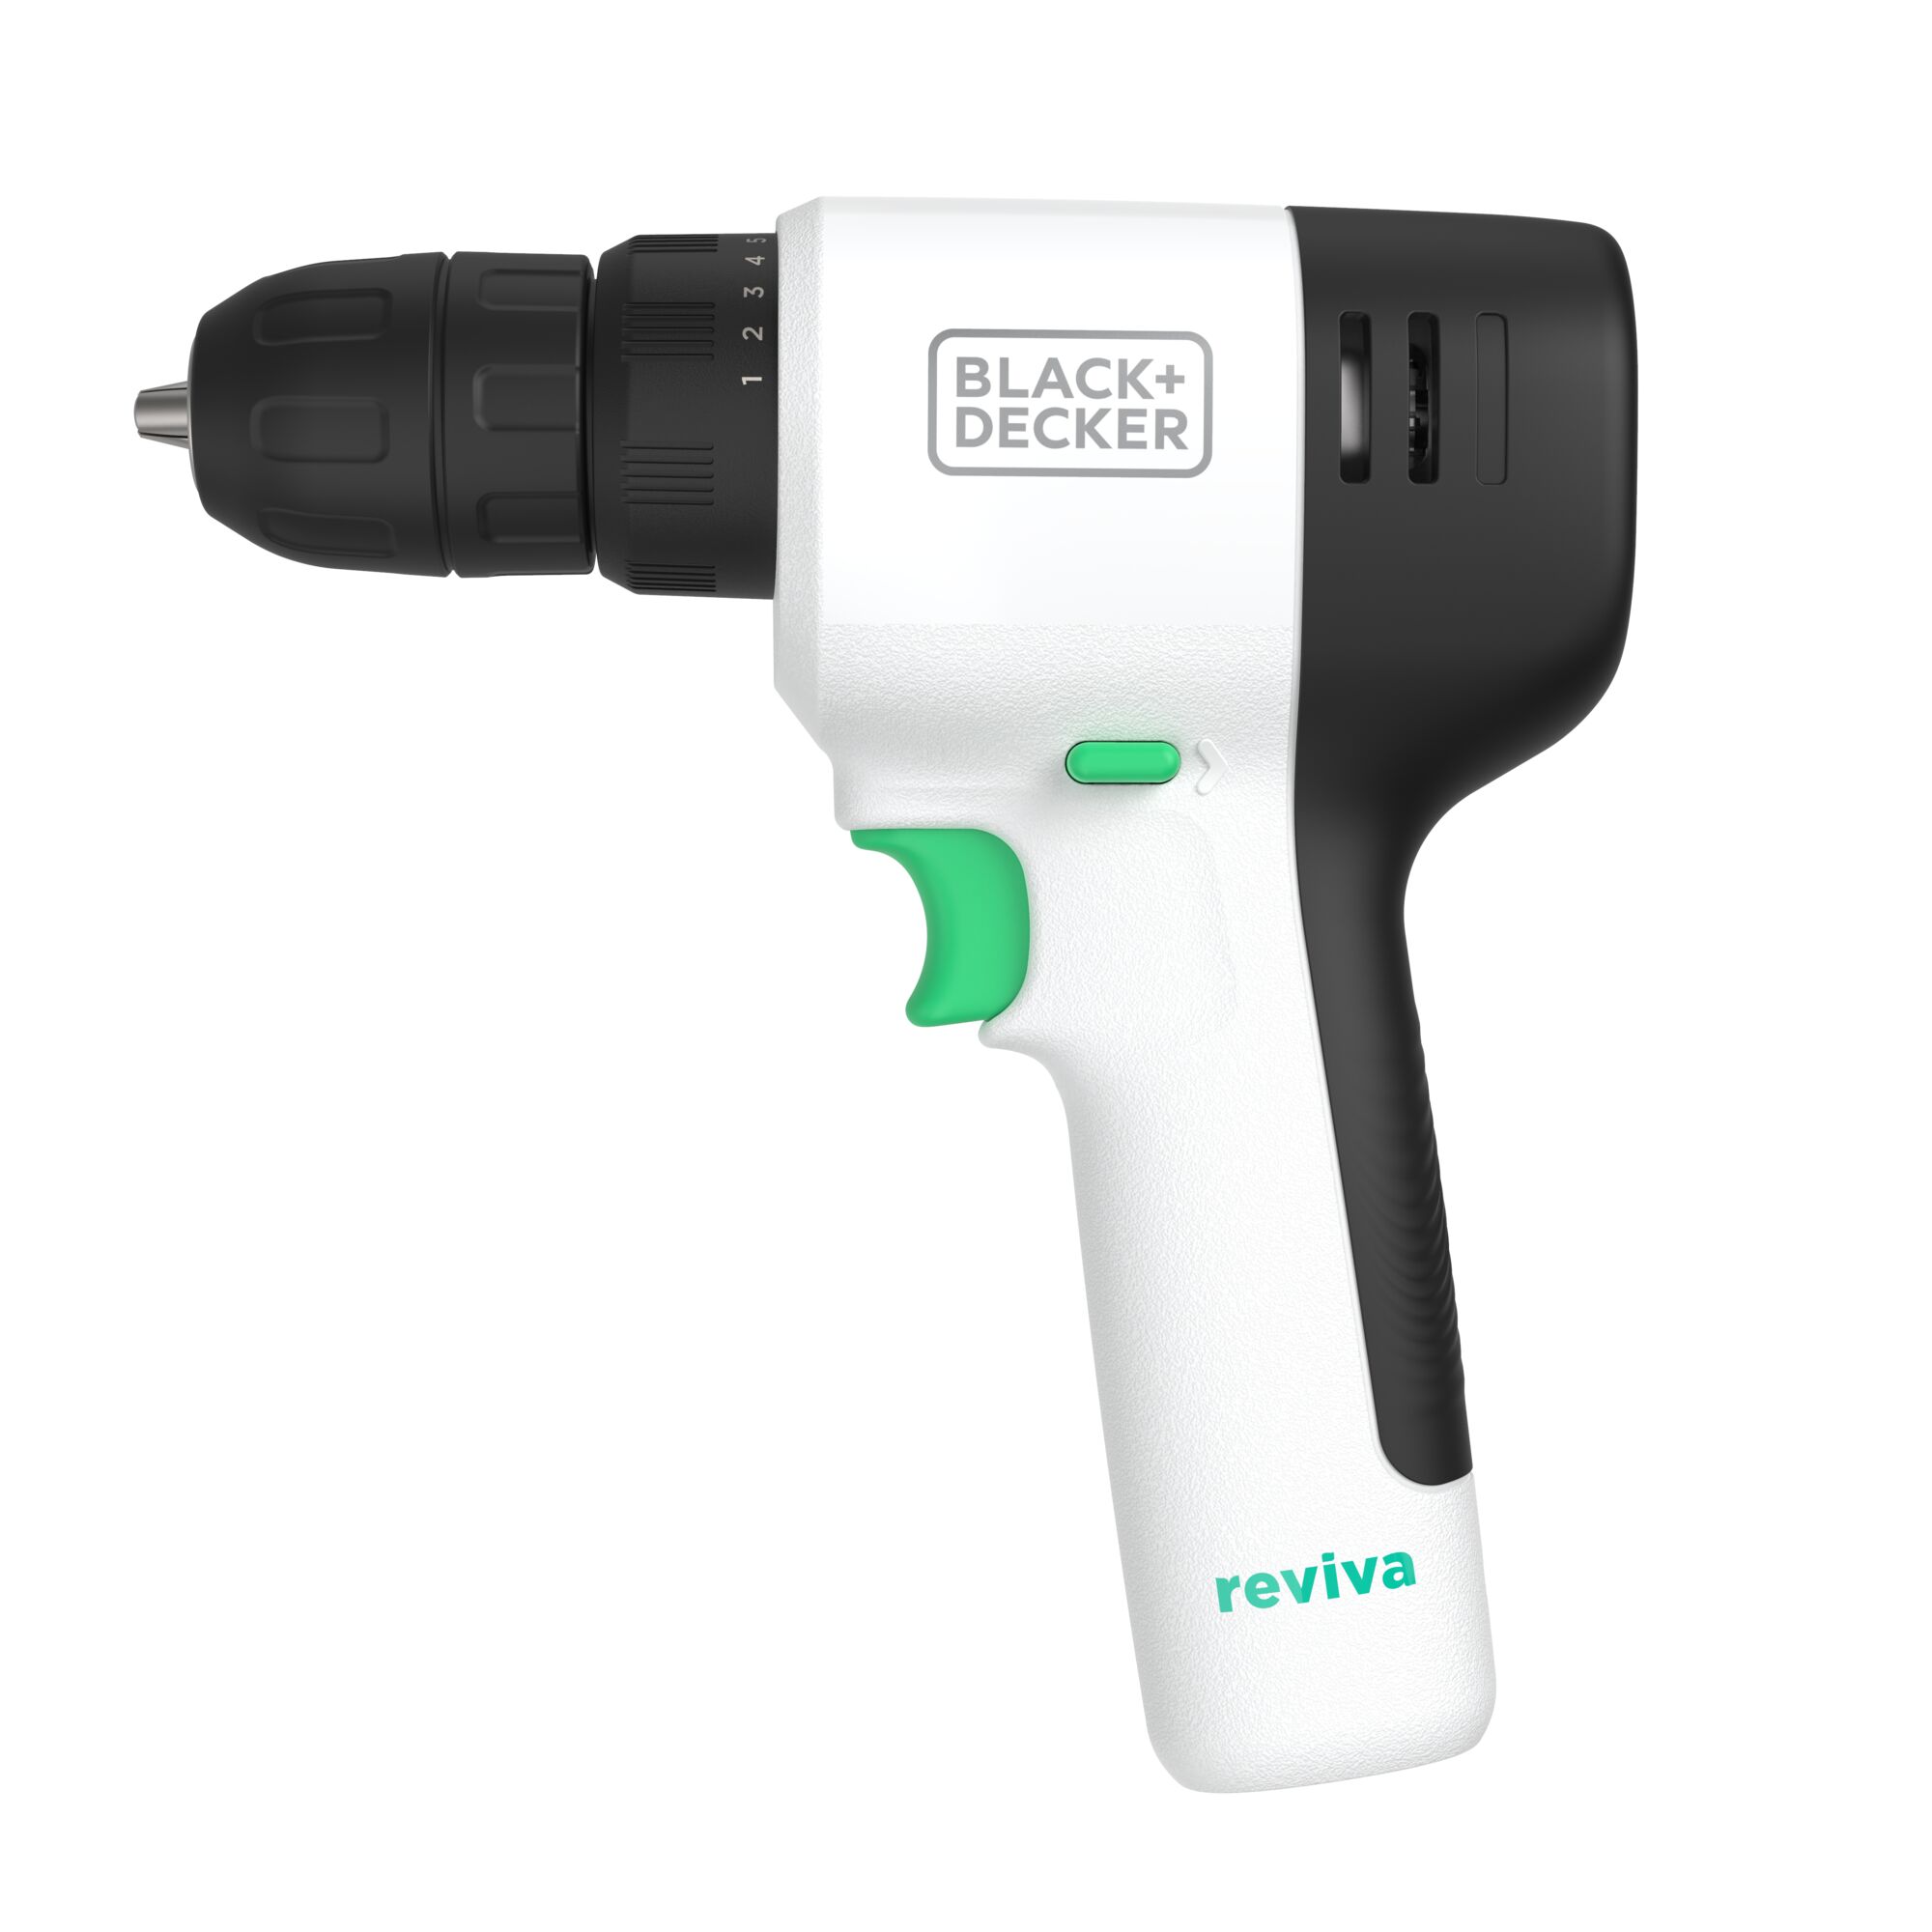 Profile of reviva™ 12V MAX* Cordless Drill/Driver on white background.